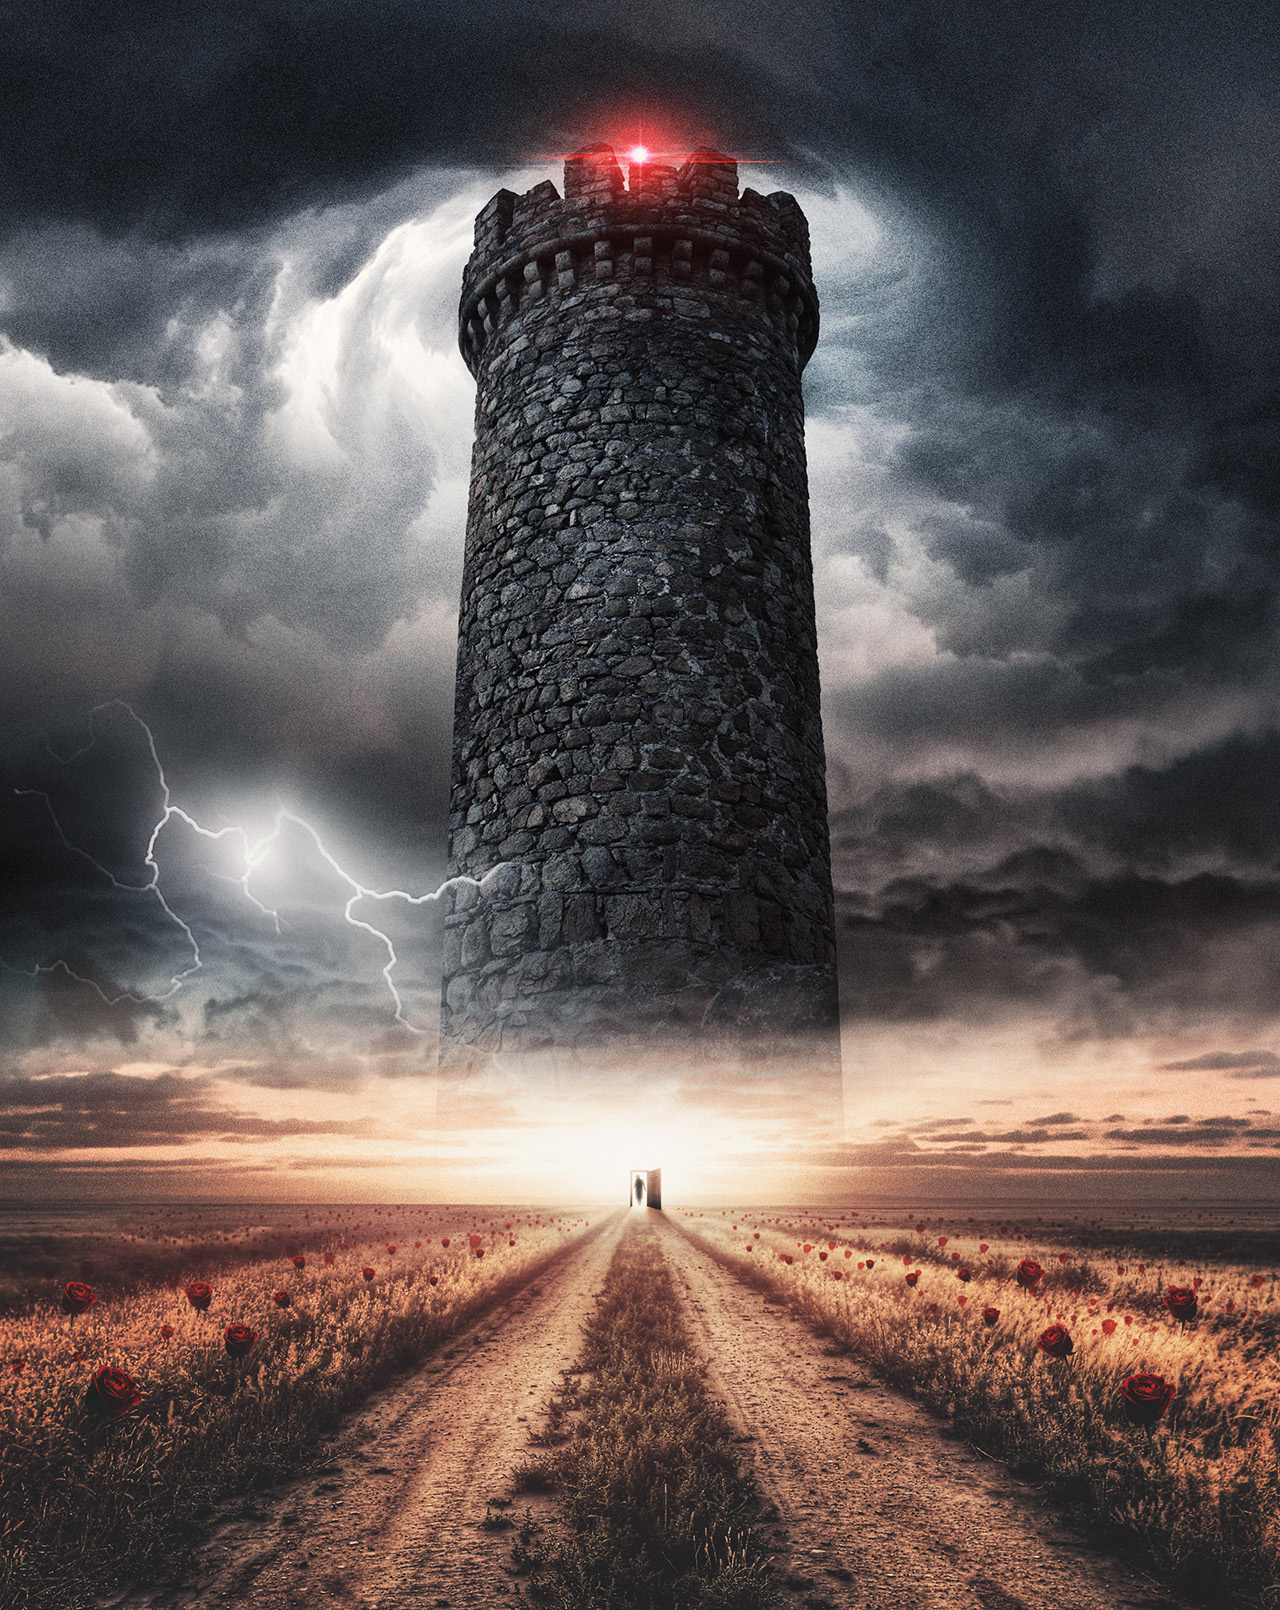 Bryan Minear | "The Dark Tower" by Stephen King